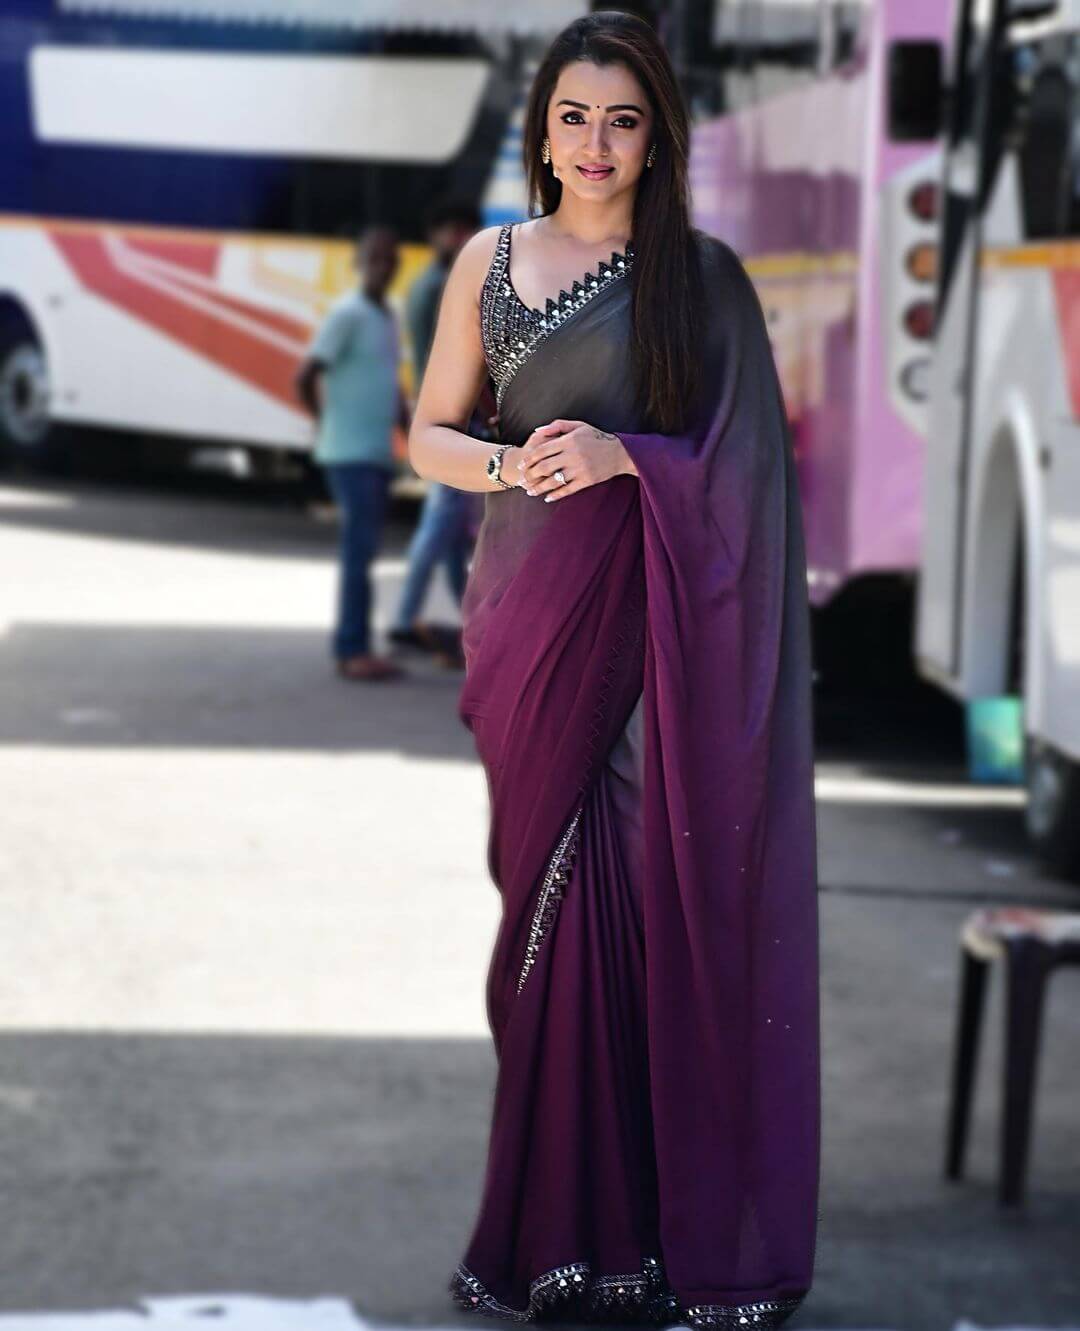 Trisha Krishnan Flattering Elegant & Classy Outfits Look In Purple & Grey Double Shade Saree With Glittery Blouse